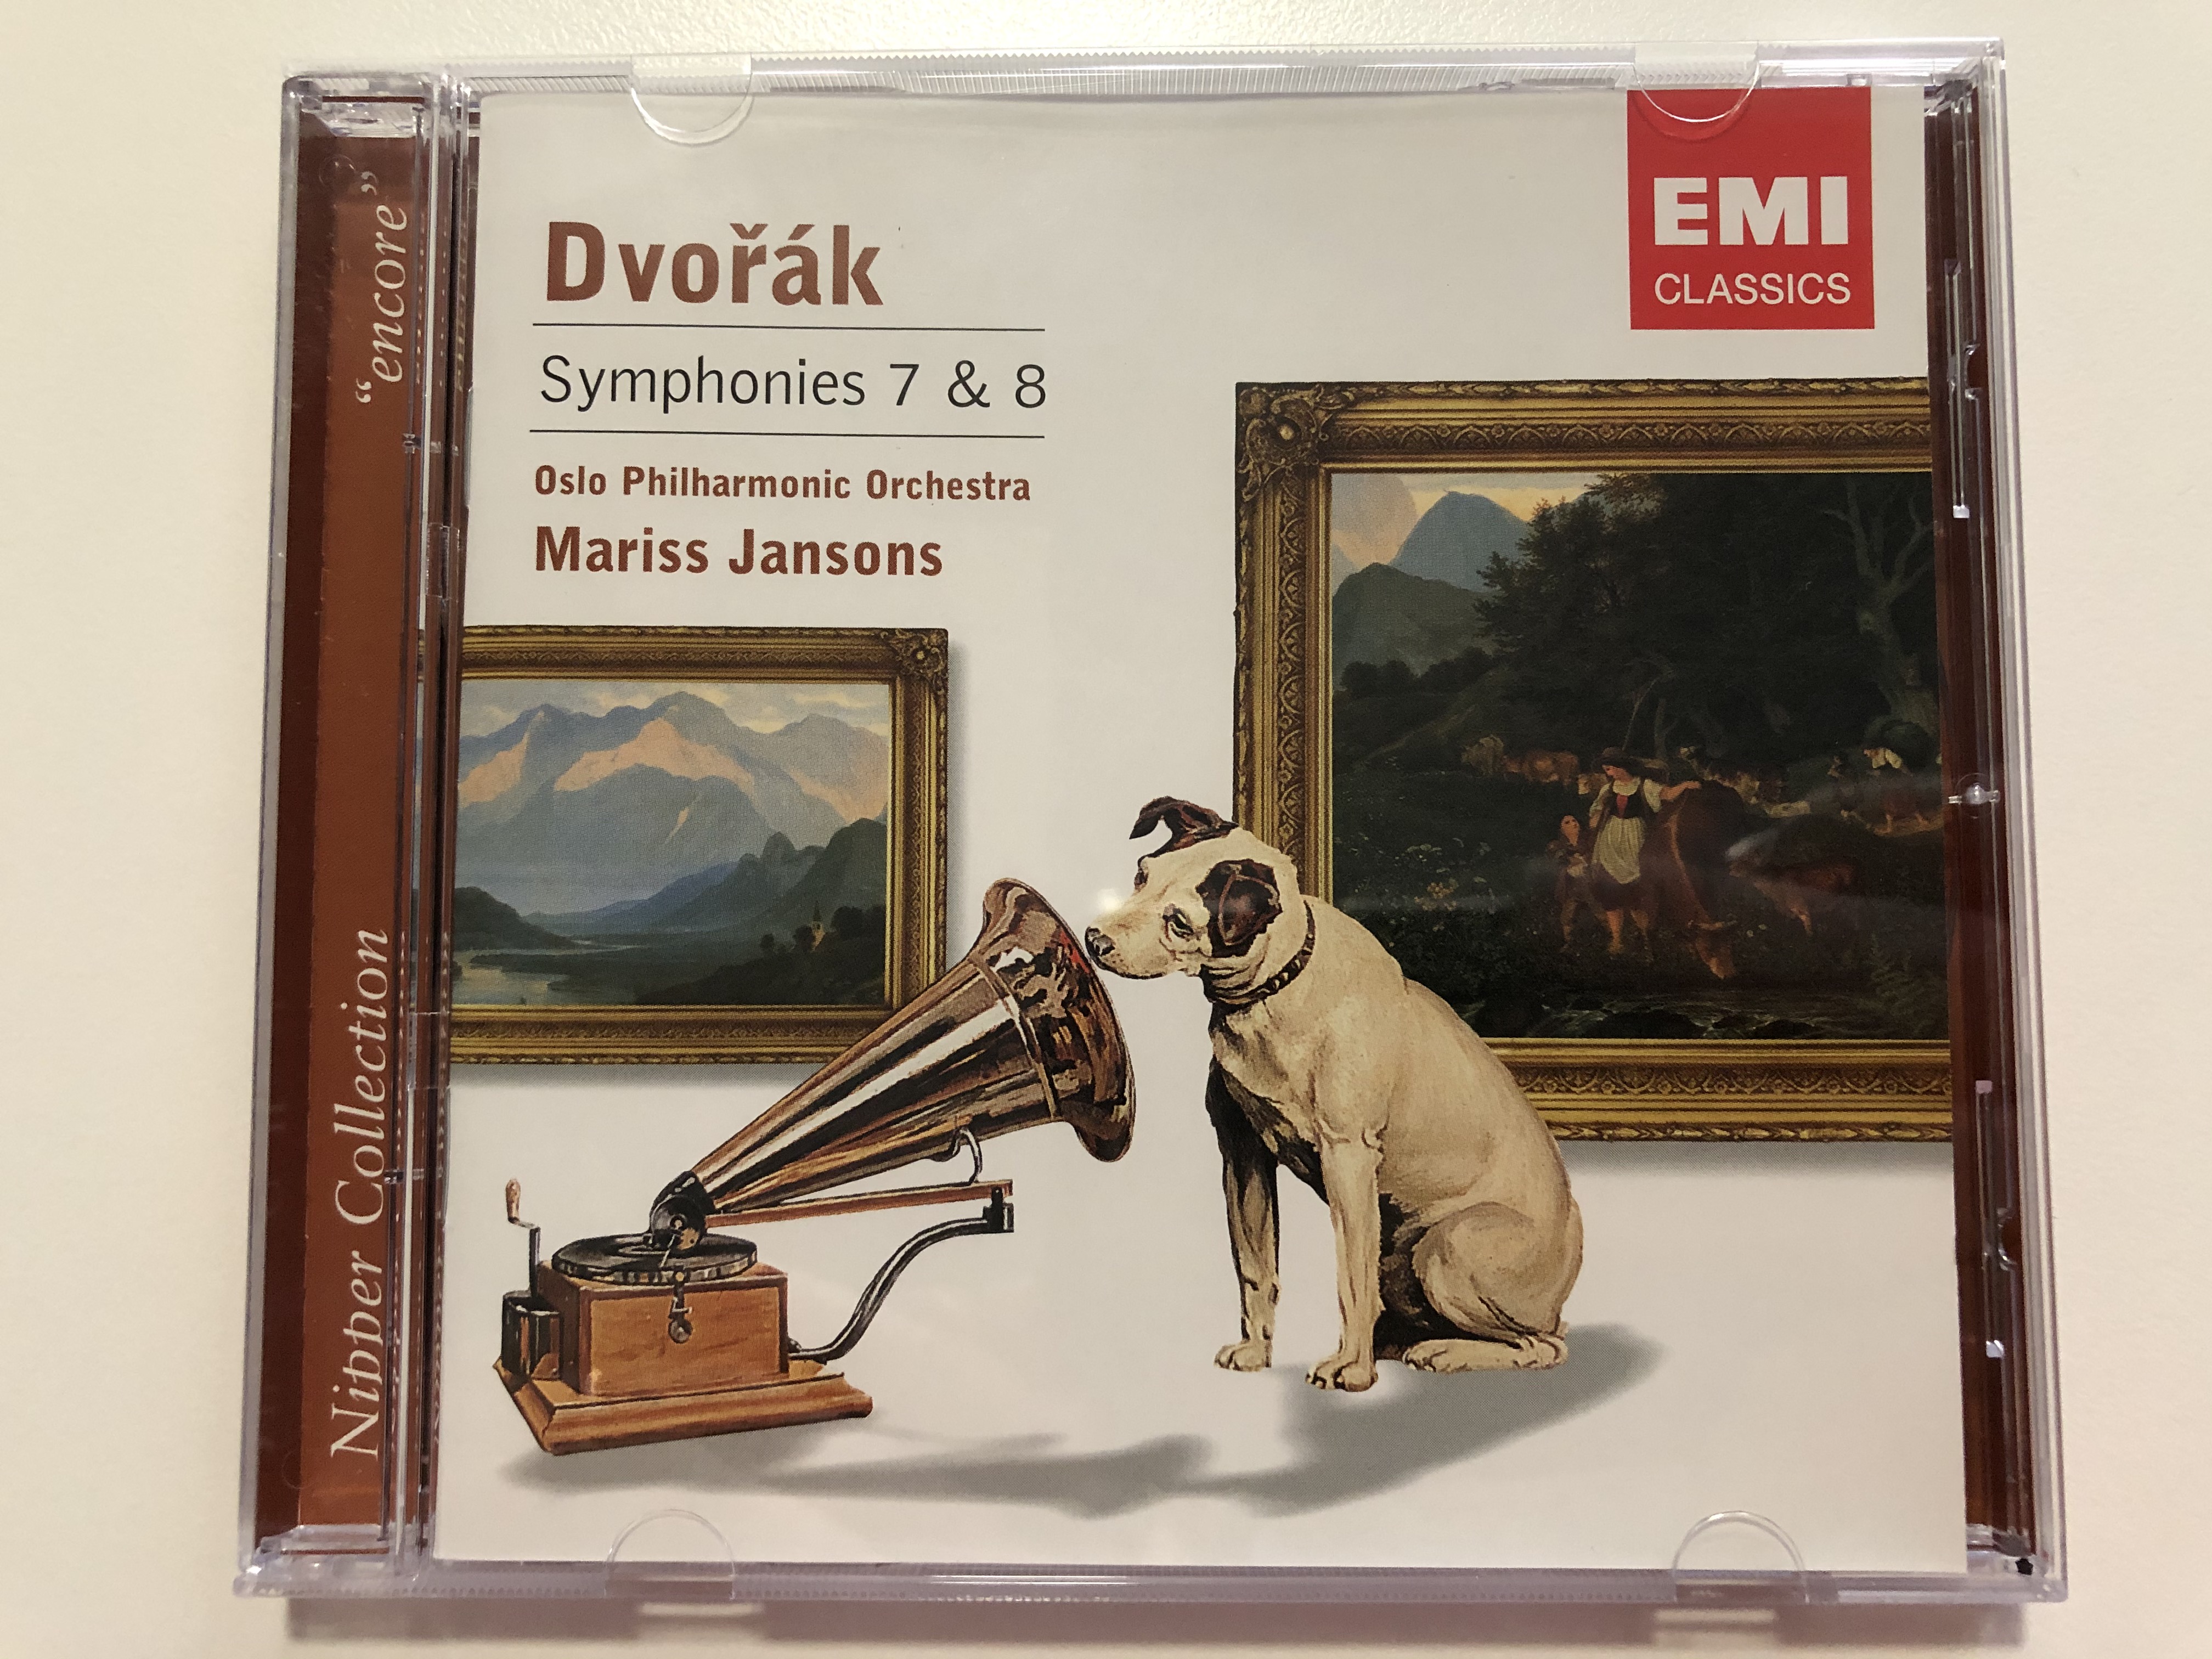 dvorak-symphonies-7-8-oslo-philharmonic-orchestra-mariss-jansons-emi-classics-audio-cd-2005-724358687224-1-.jpg